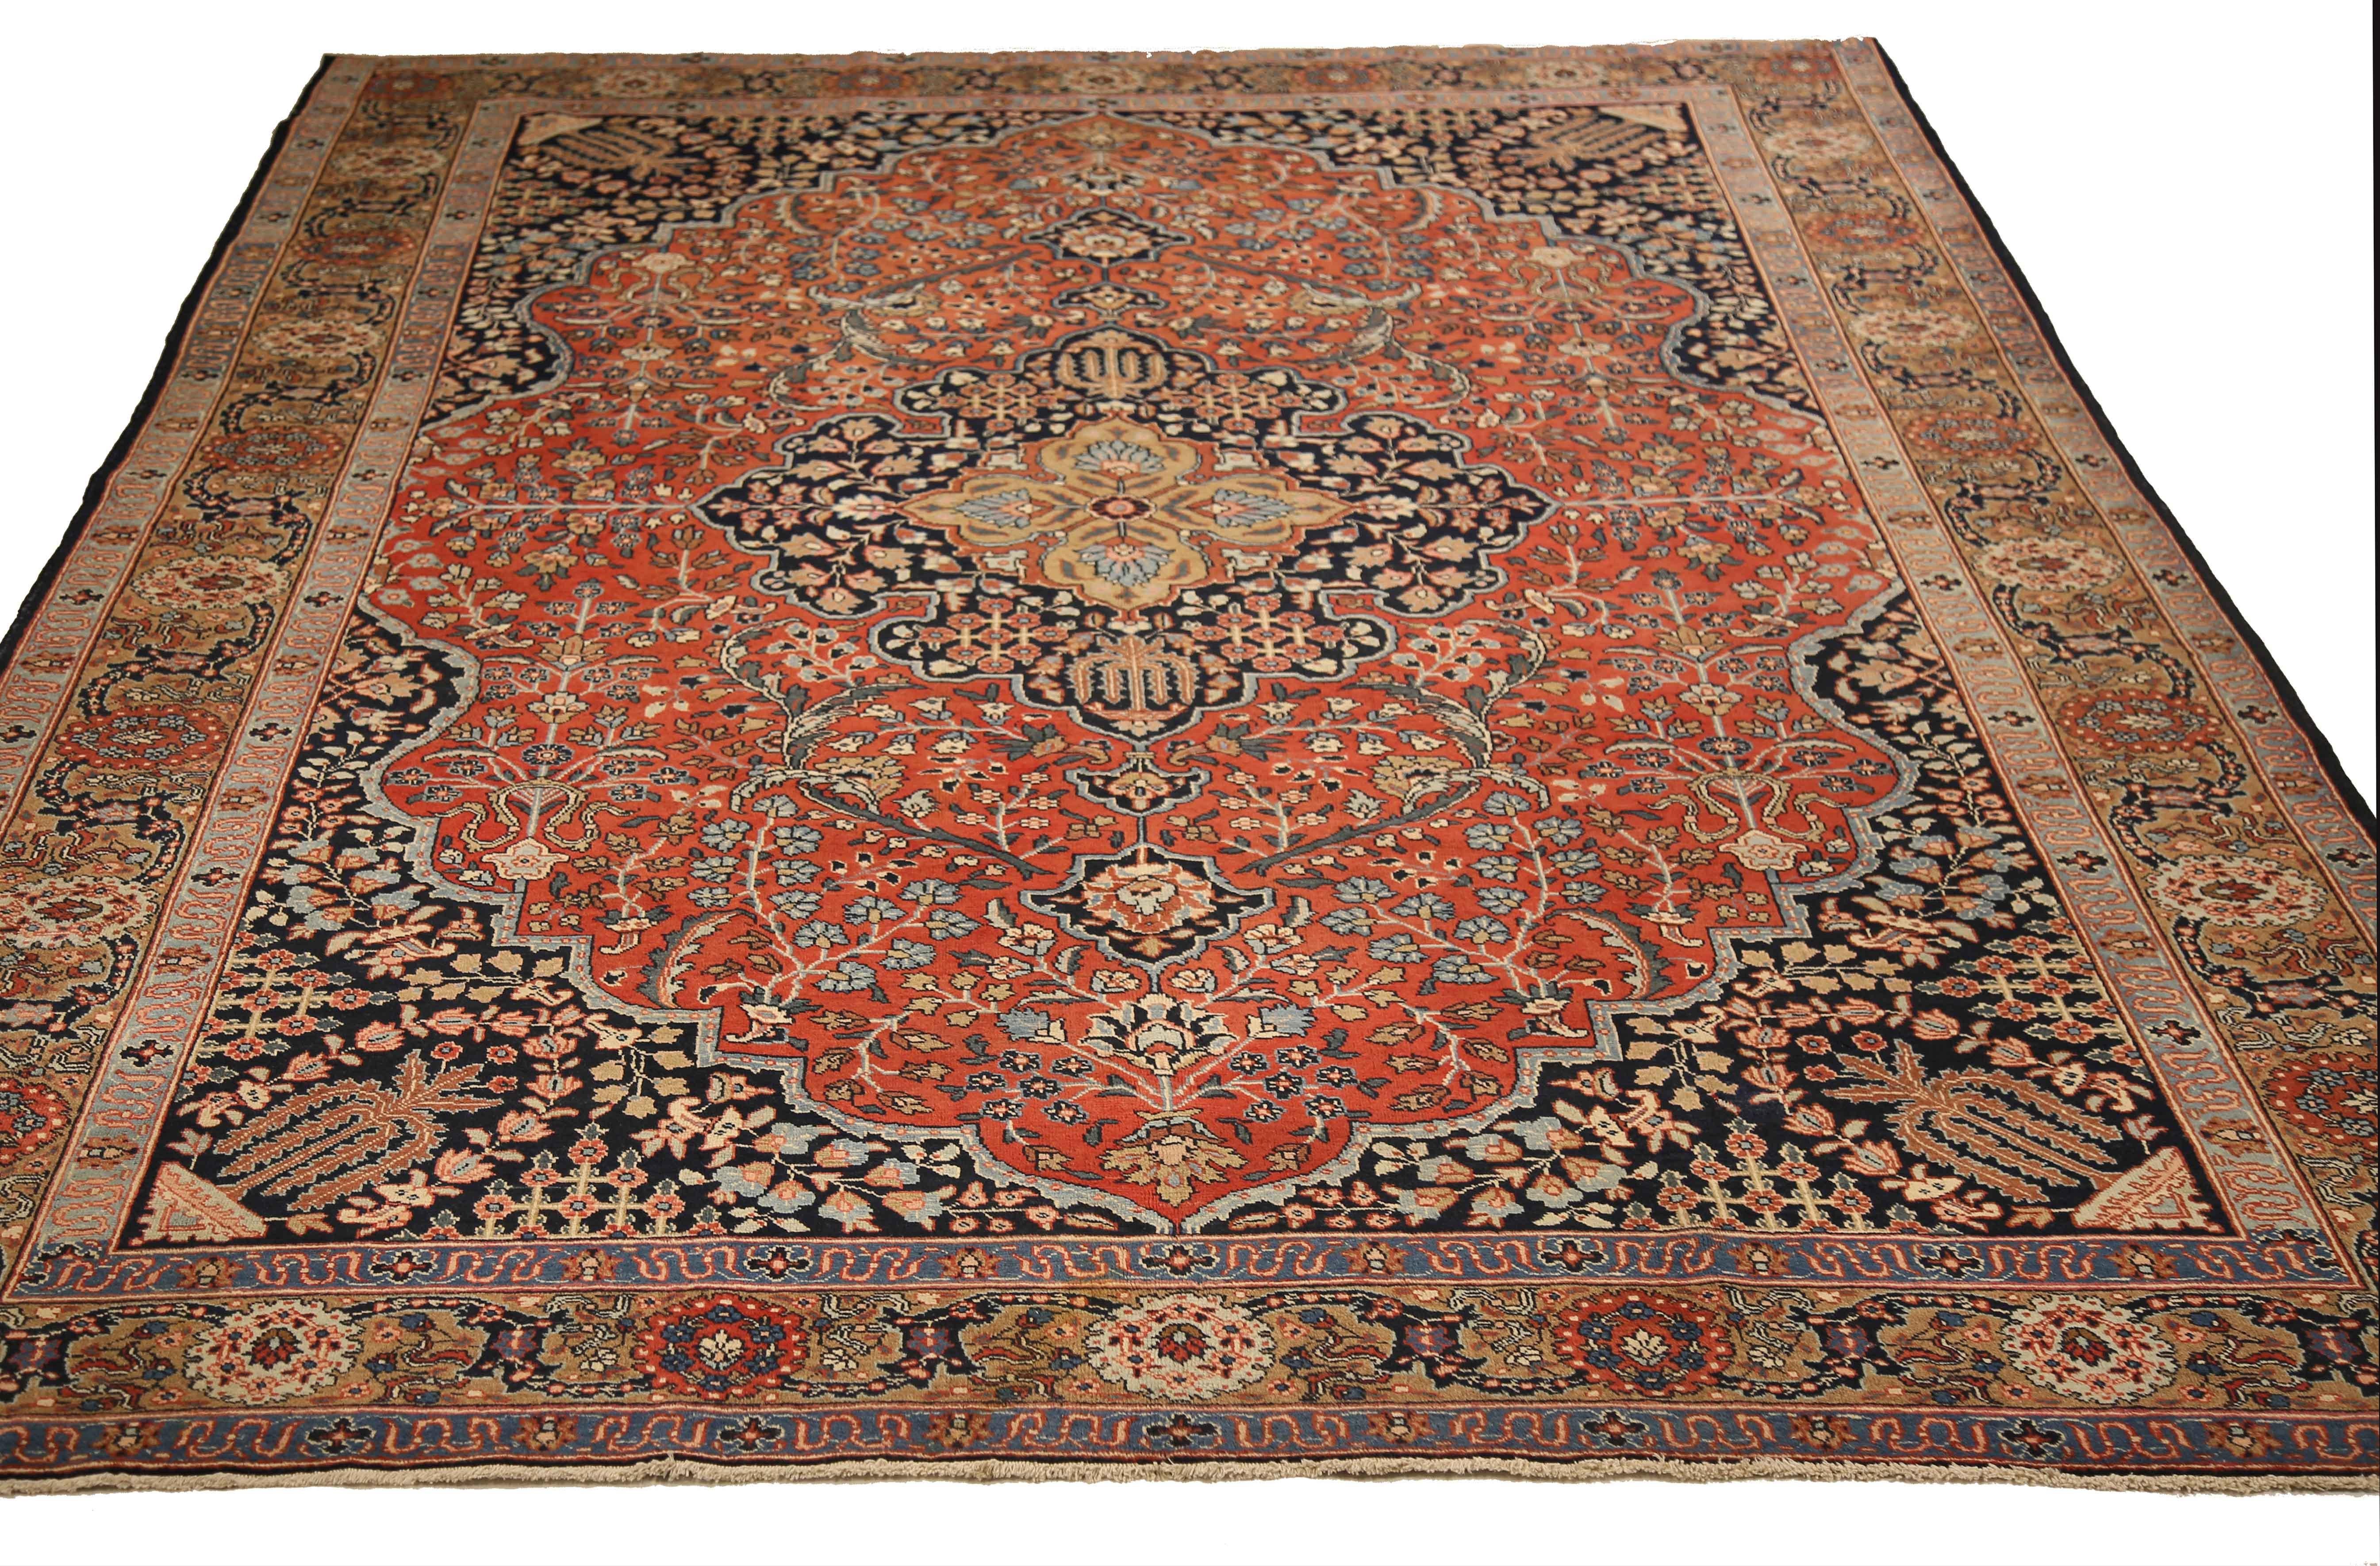 Oushak Antique Persian Tabriz Rug in Black & Red Floral Patterns on Beige Center Field For Sale